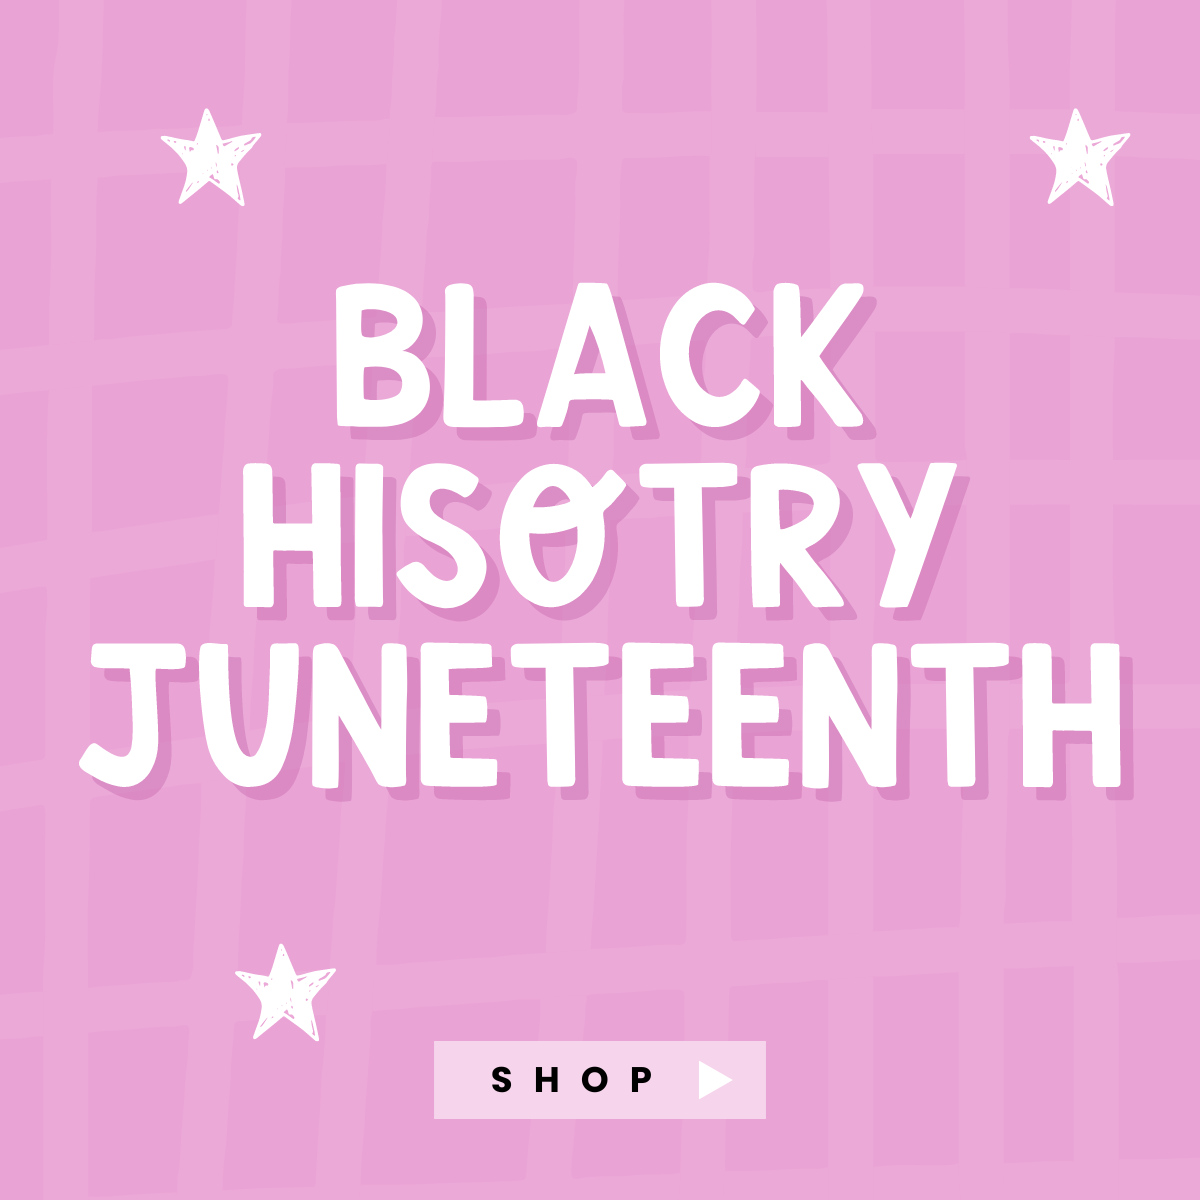 Black History / Juneteenth